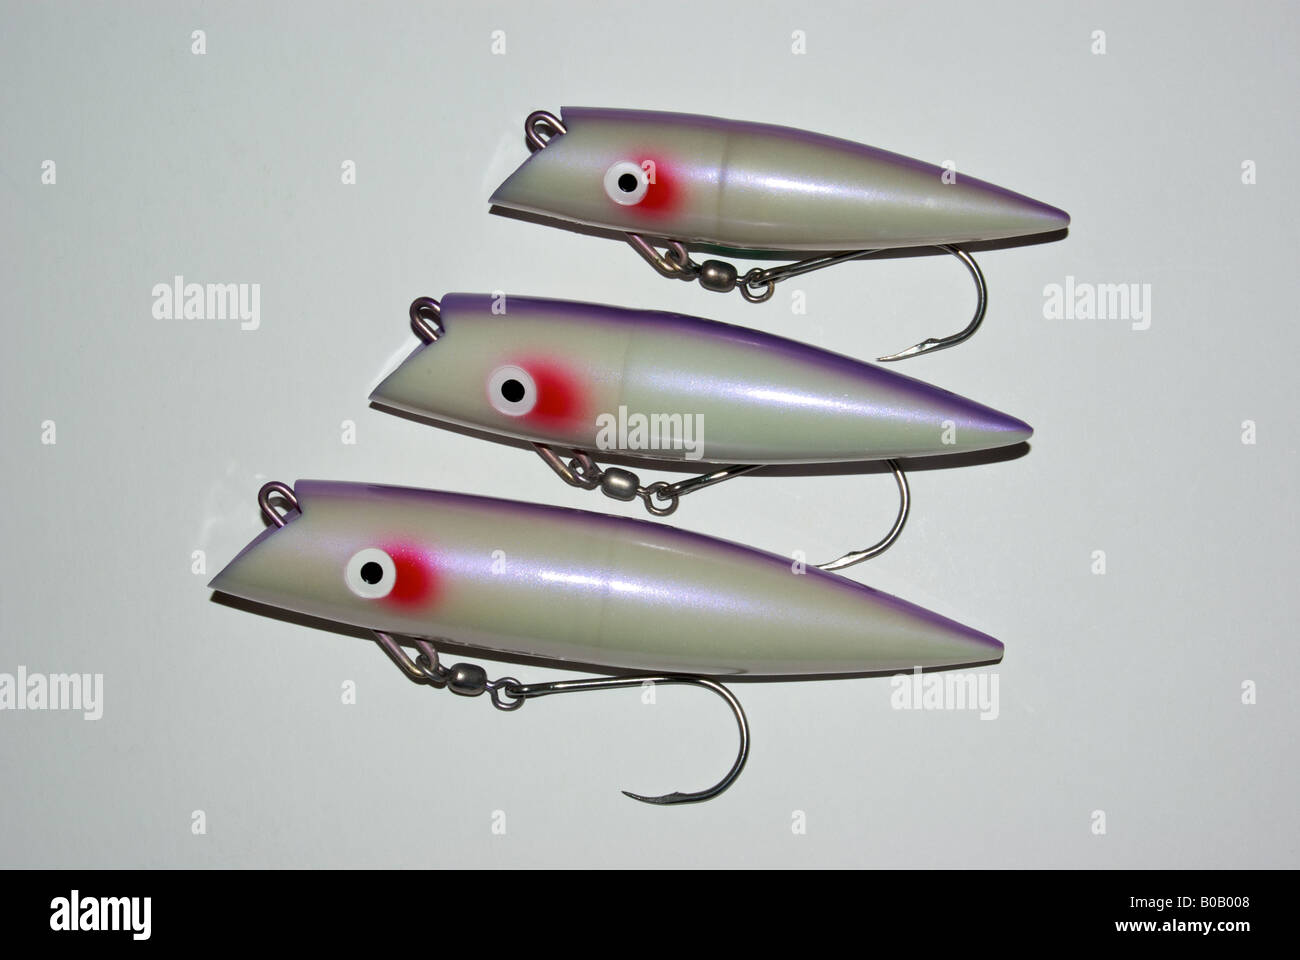 https://c8.alamy.com/comp/B0B008/large-tomic-530-uv-purple-glow-trolling-plug-fishing-lure-will-attracts-B0B008.jpg